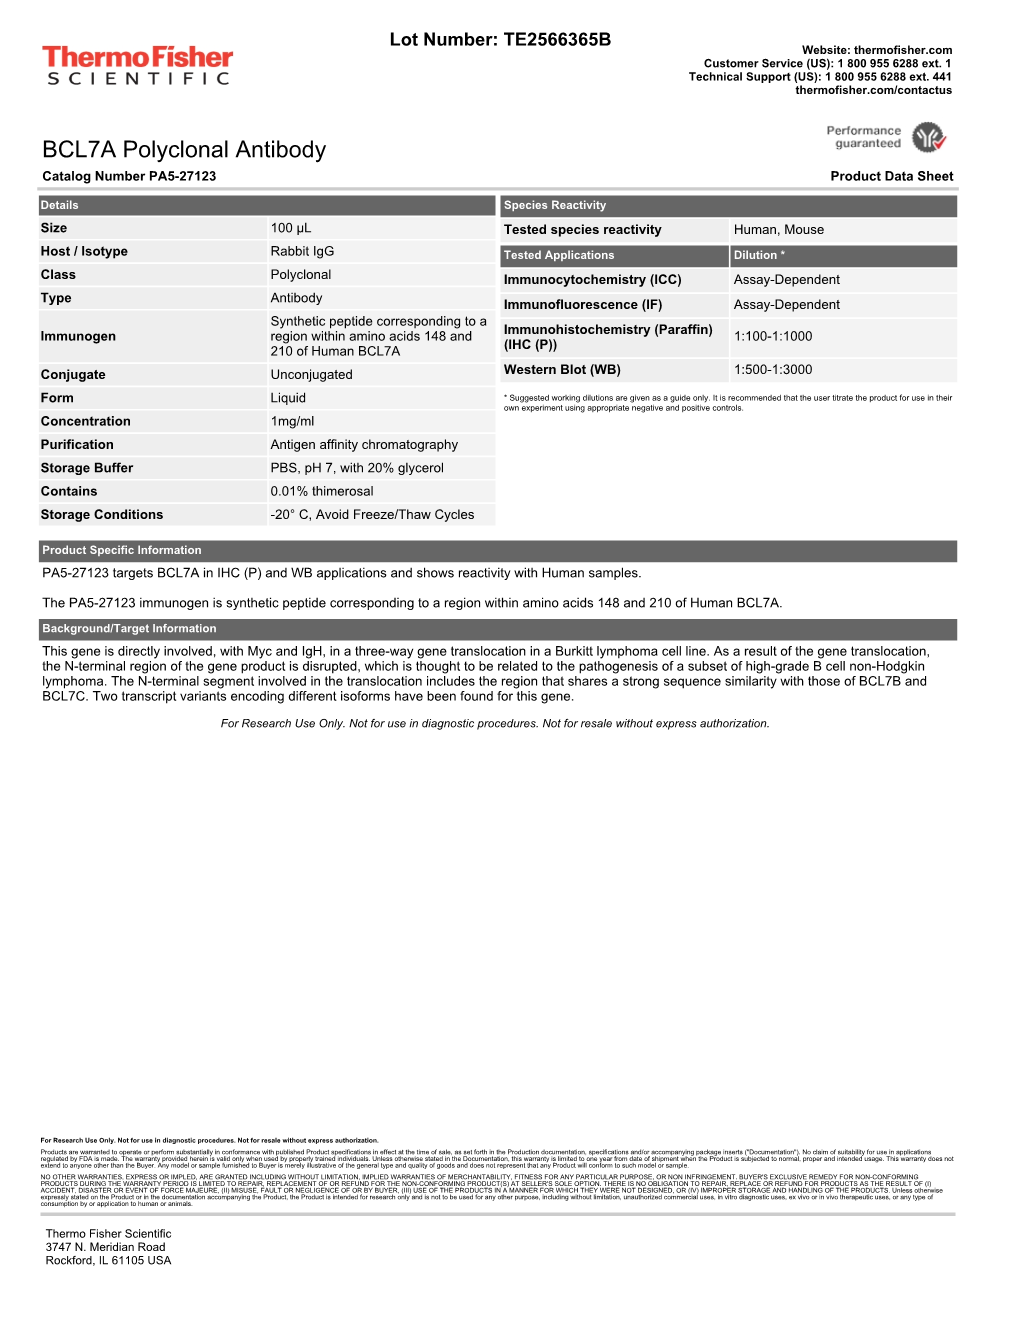 BCL7A Polyclonal Antibody Catalog Number PA5-27123 Product Data Sheet